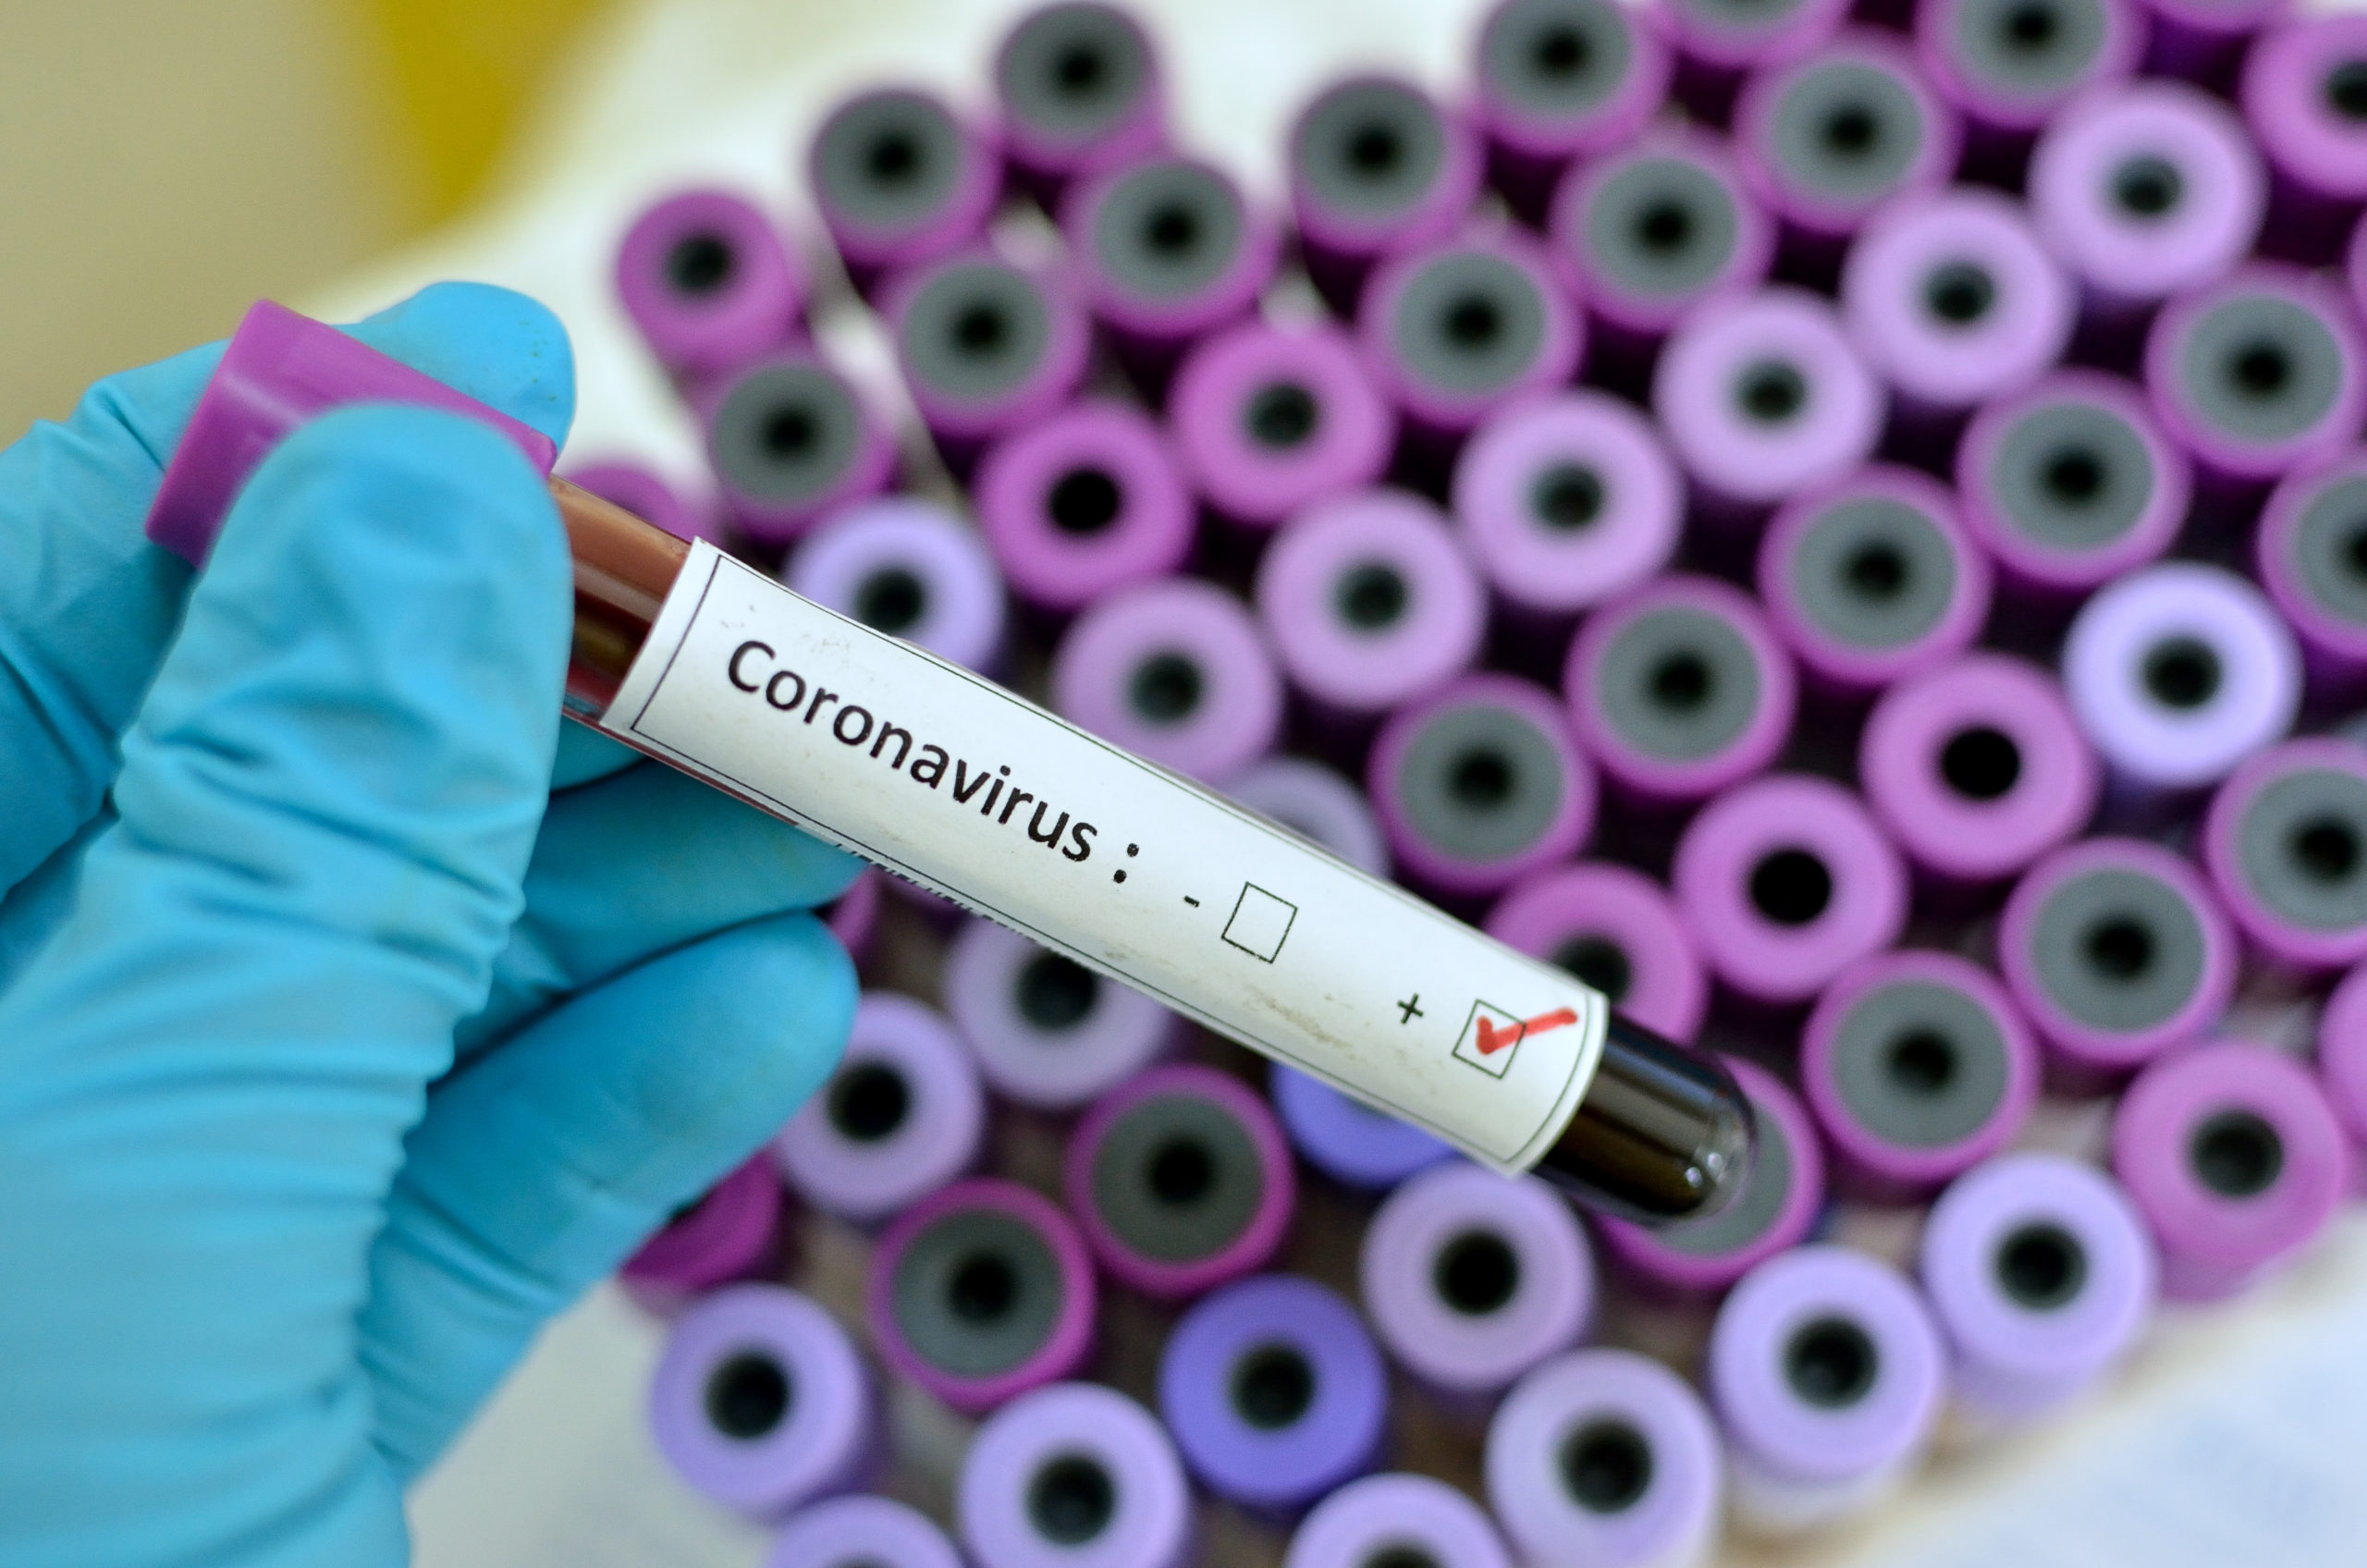 Minnesota Schools Receive Guidance on Handling Coronavirus